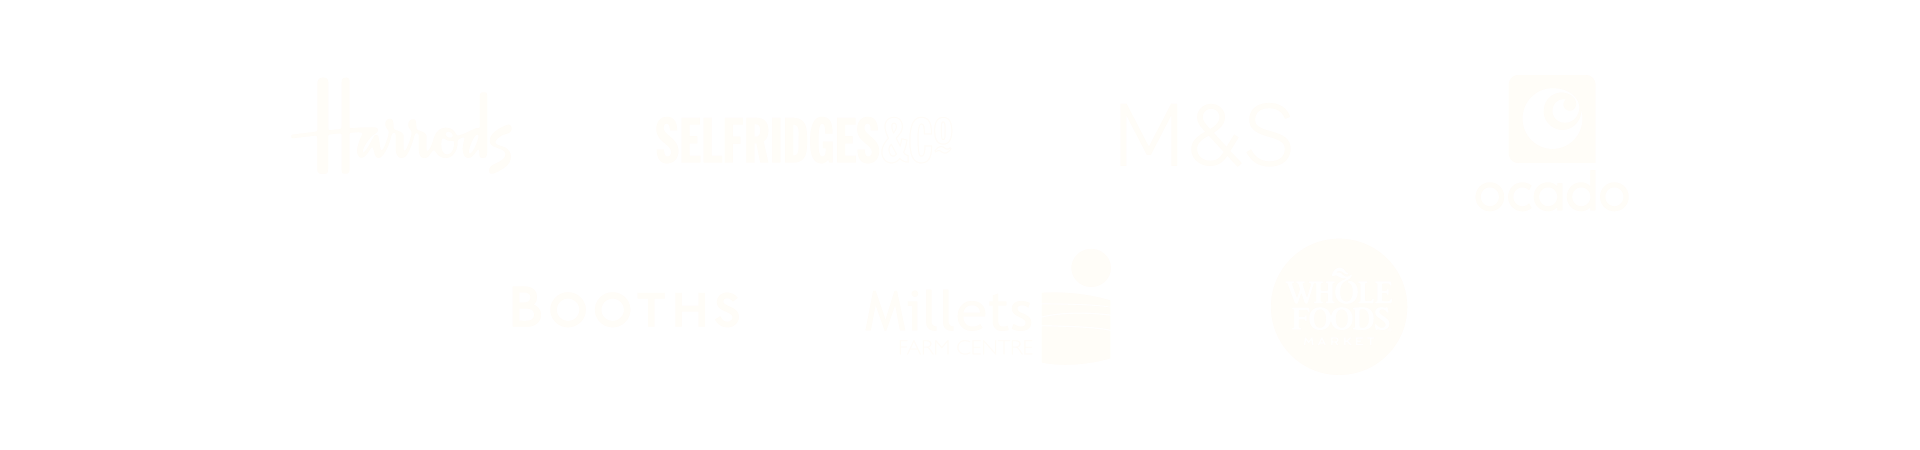 Logos: Harrods, Selfridges, Marks and Spencers, Ocado, Booths, Millets, Whole Foods.